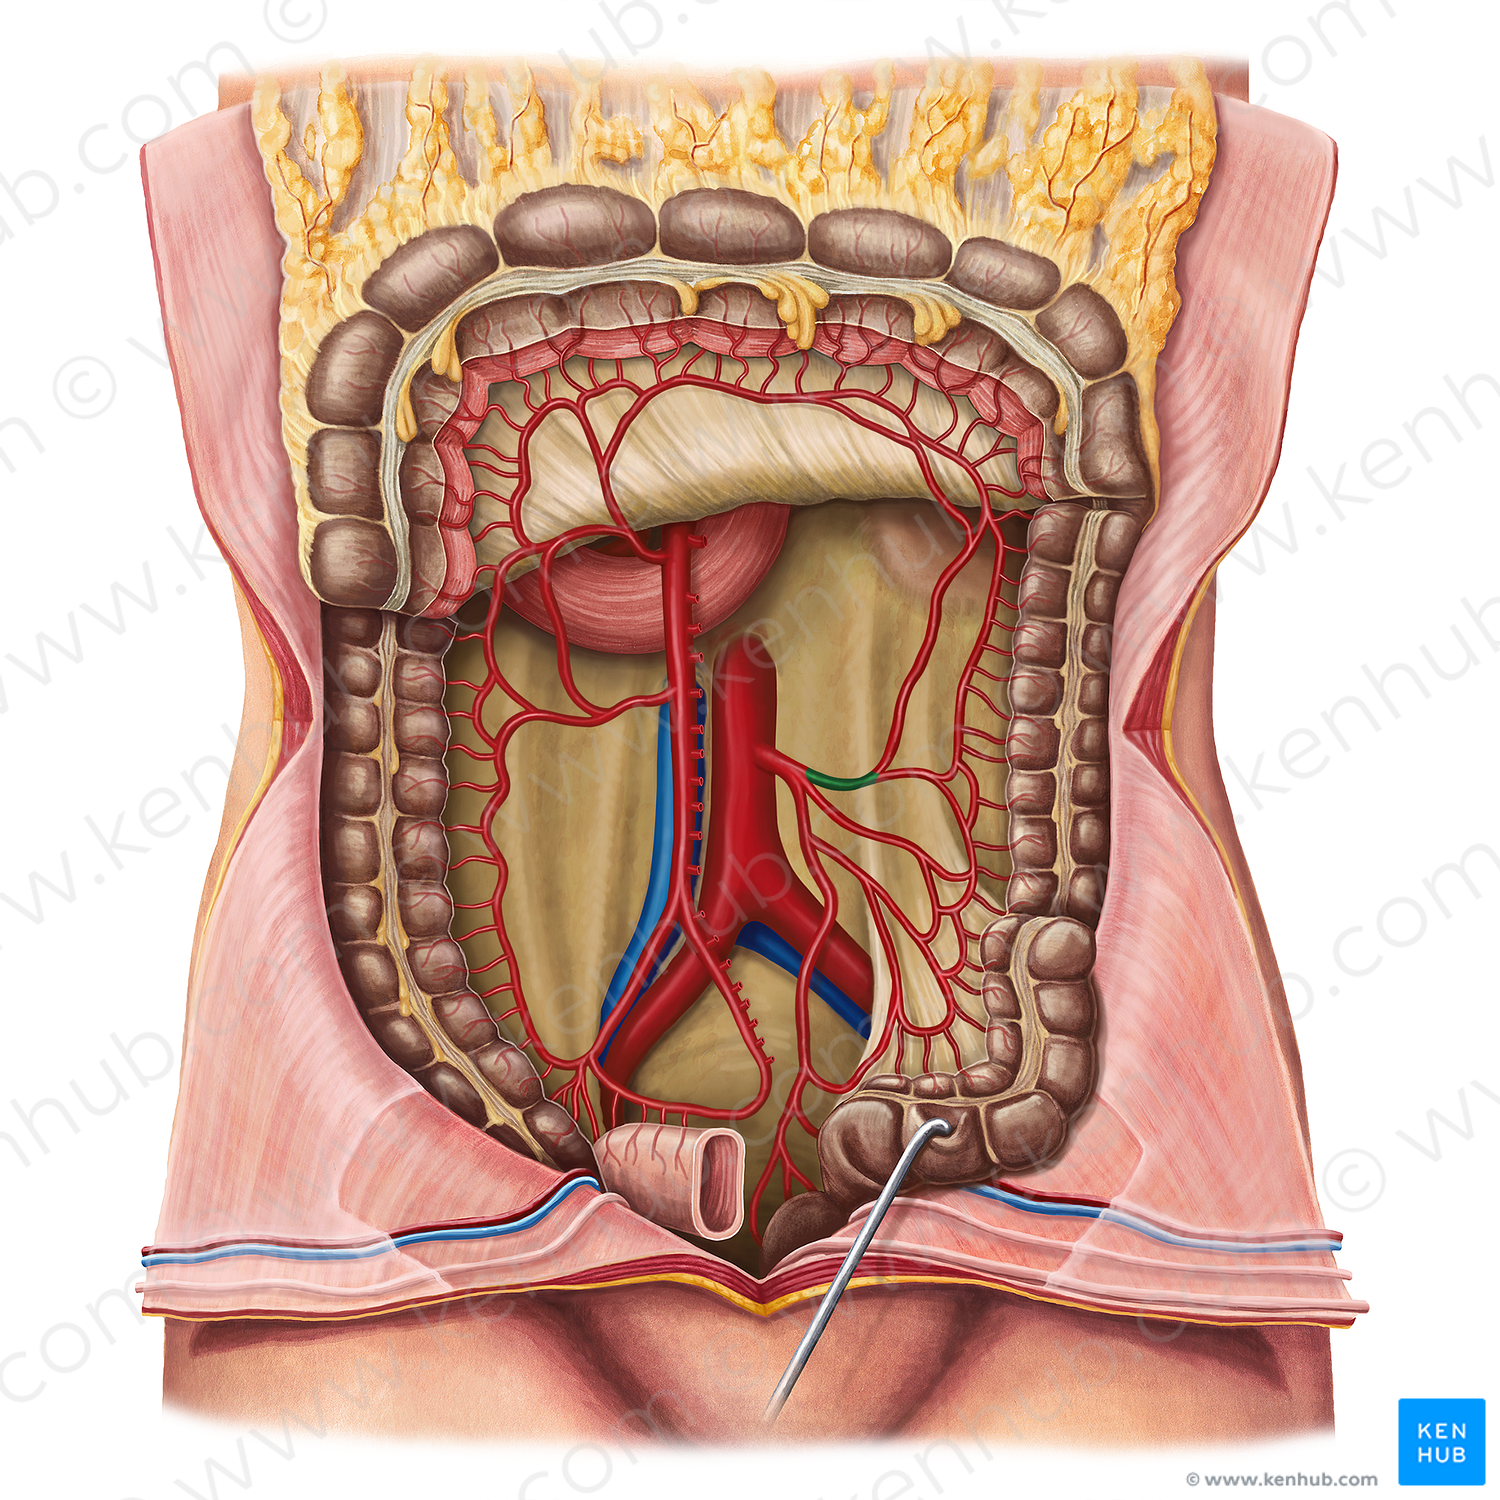 Left colic artery (#1064)